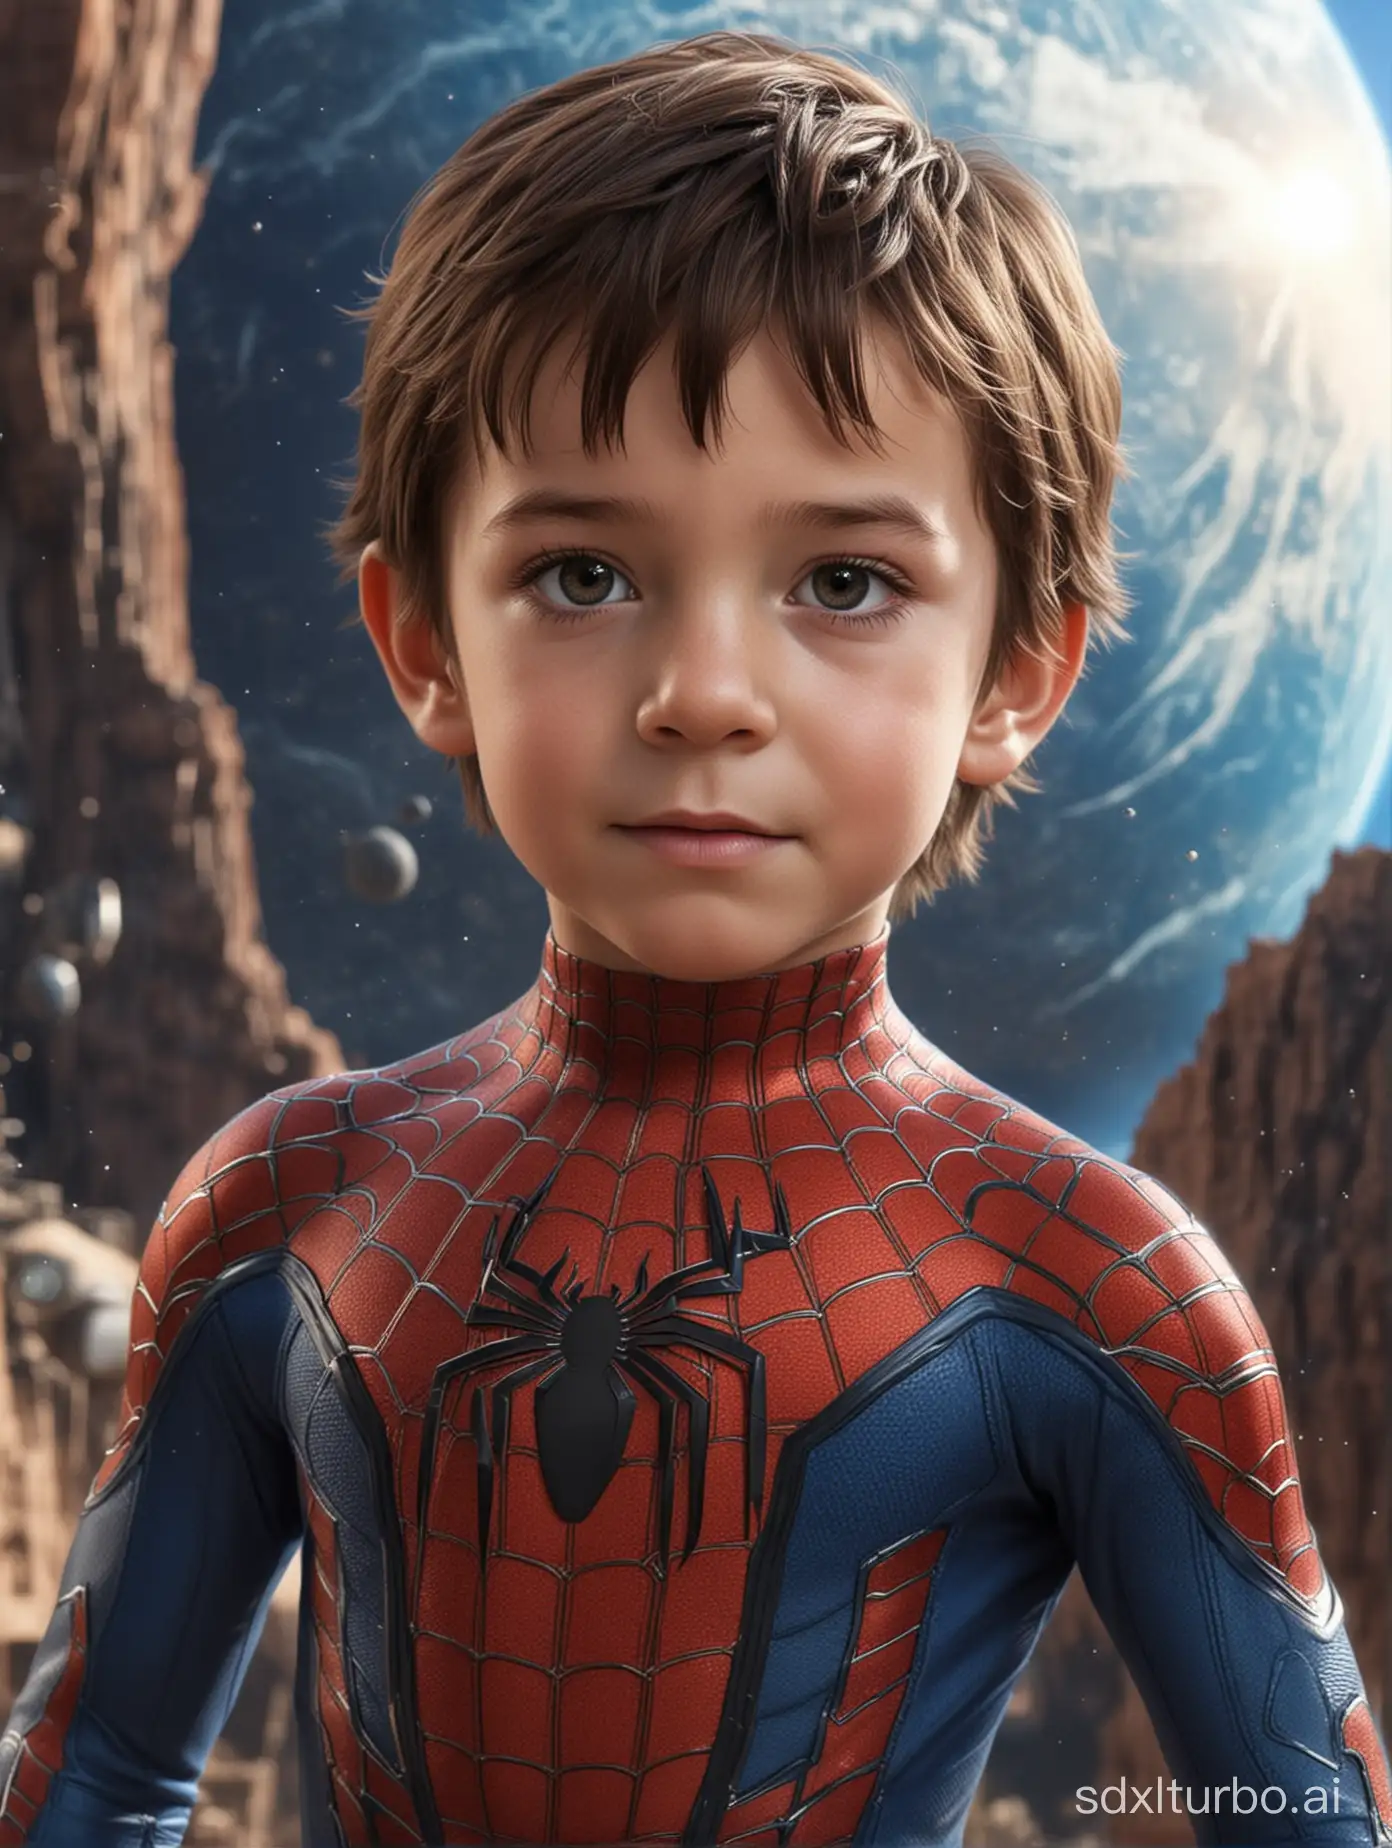 Child-in-SpiderMan-Suit-Gazes-at-Blue-Planet-in-SciFi-Scene